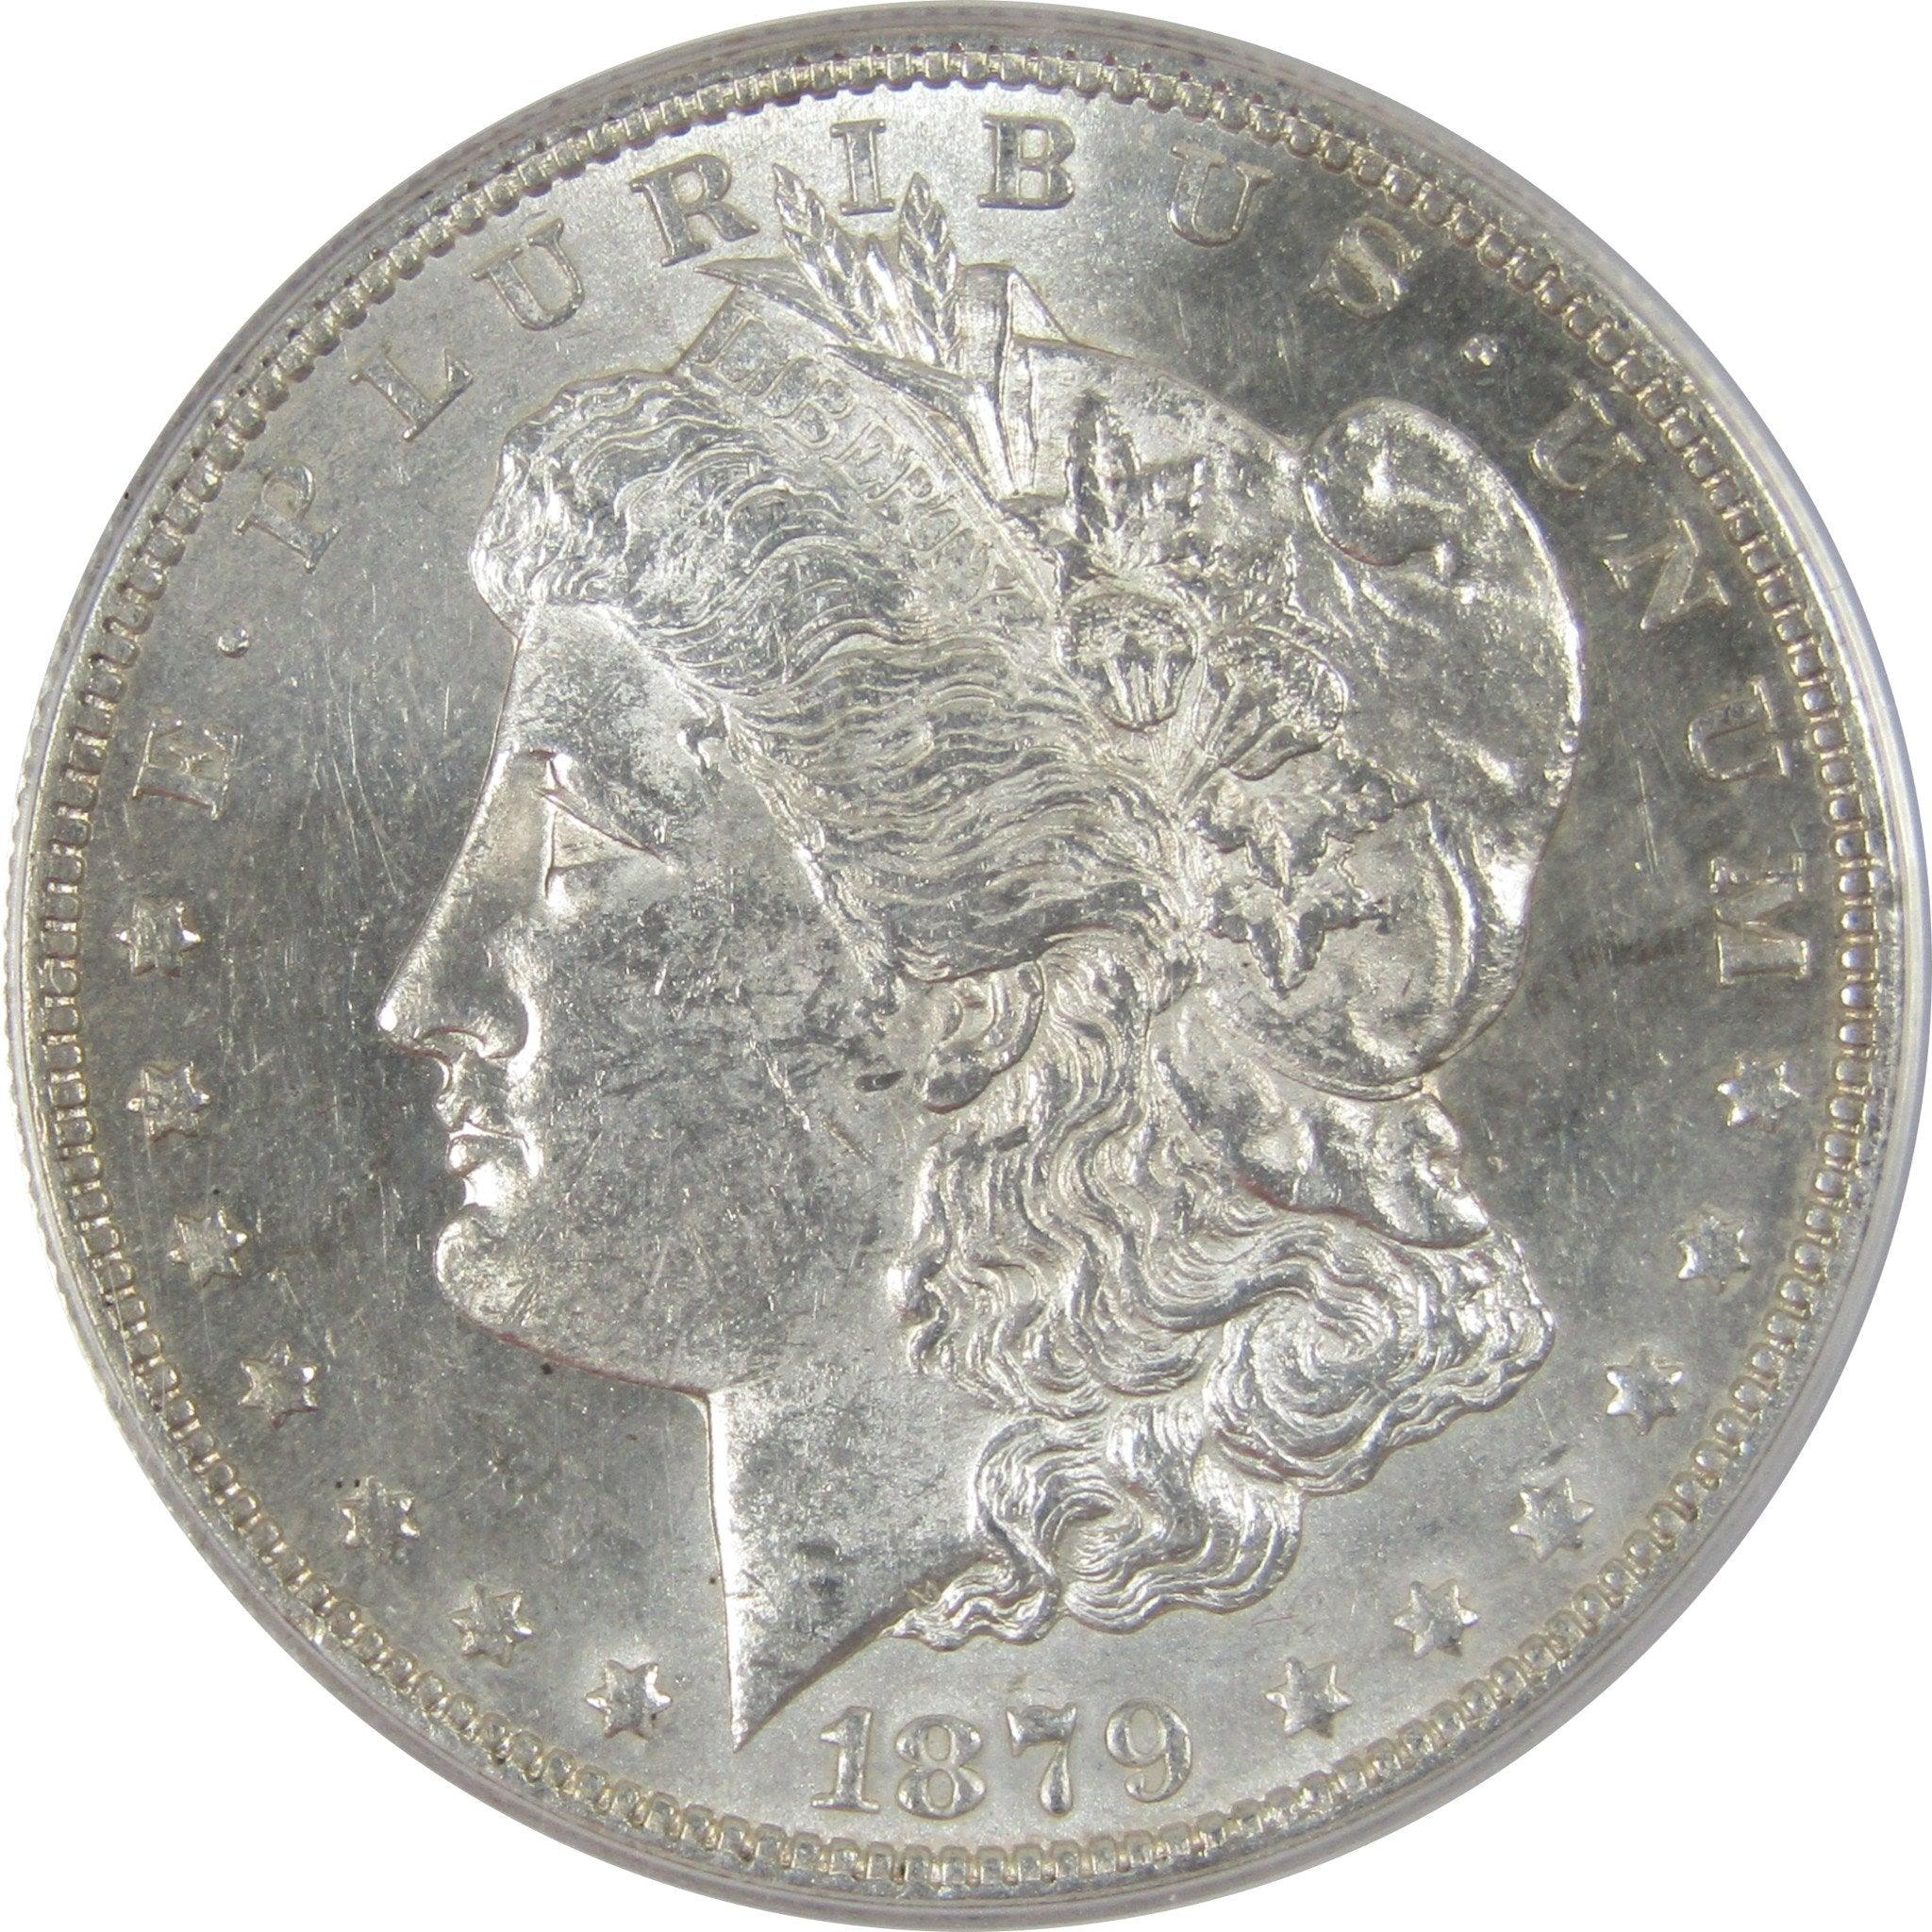 1879 S Rev 78 VAM-52 Morgan Dollar AU 58 ANACS Silver SKU:CPC1101 - Morgan coin - Morgan silver dollar - Morgan silver dollar for sale - Profile Coins &amp; Collectibles